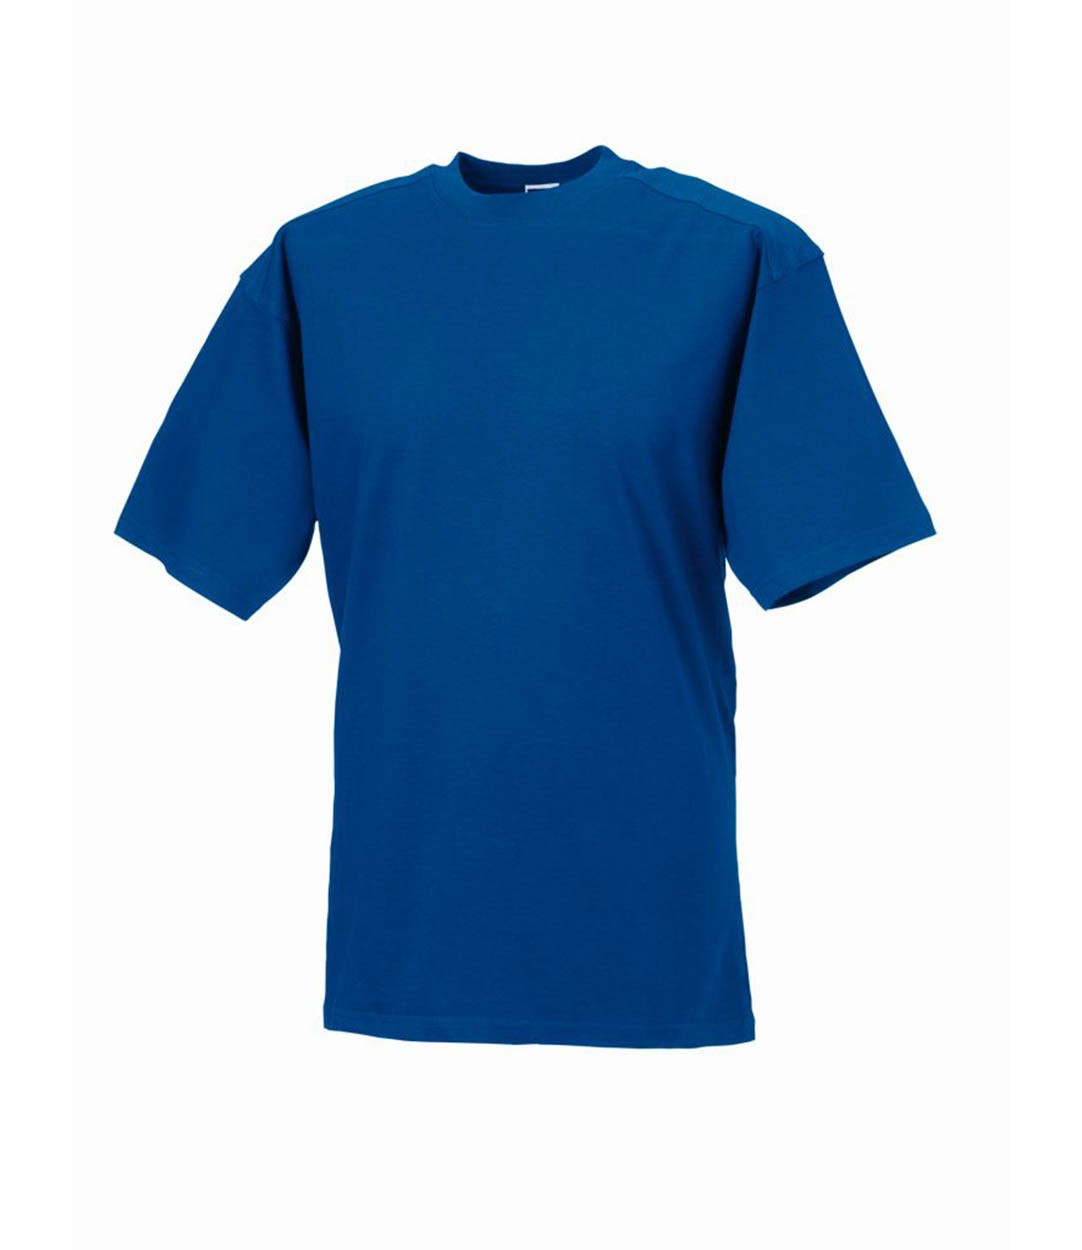 Russell 010M Workwear T-Shirt - Heavyweight T Shirts - Unisex / Men's T  Shirts - T Shirts - Leisurewear - Best Workwear